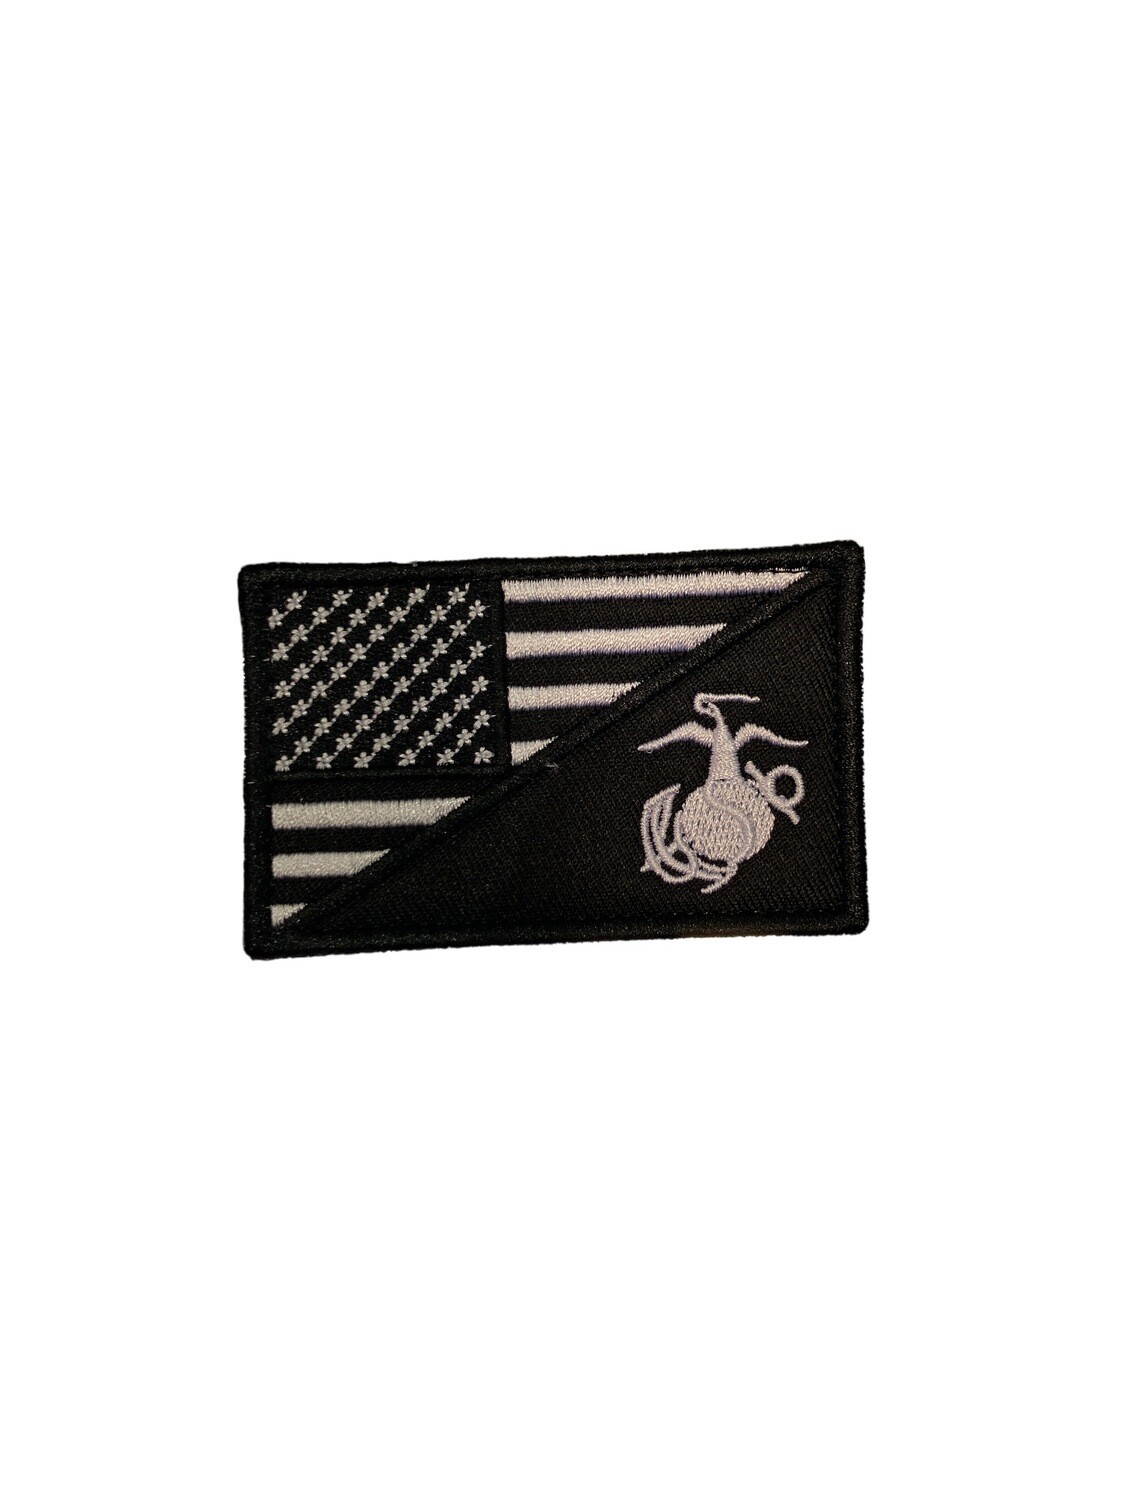 Patches US Flag/ Marines Black & White